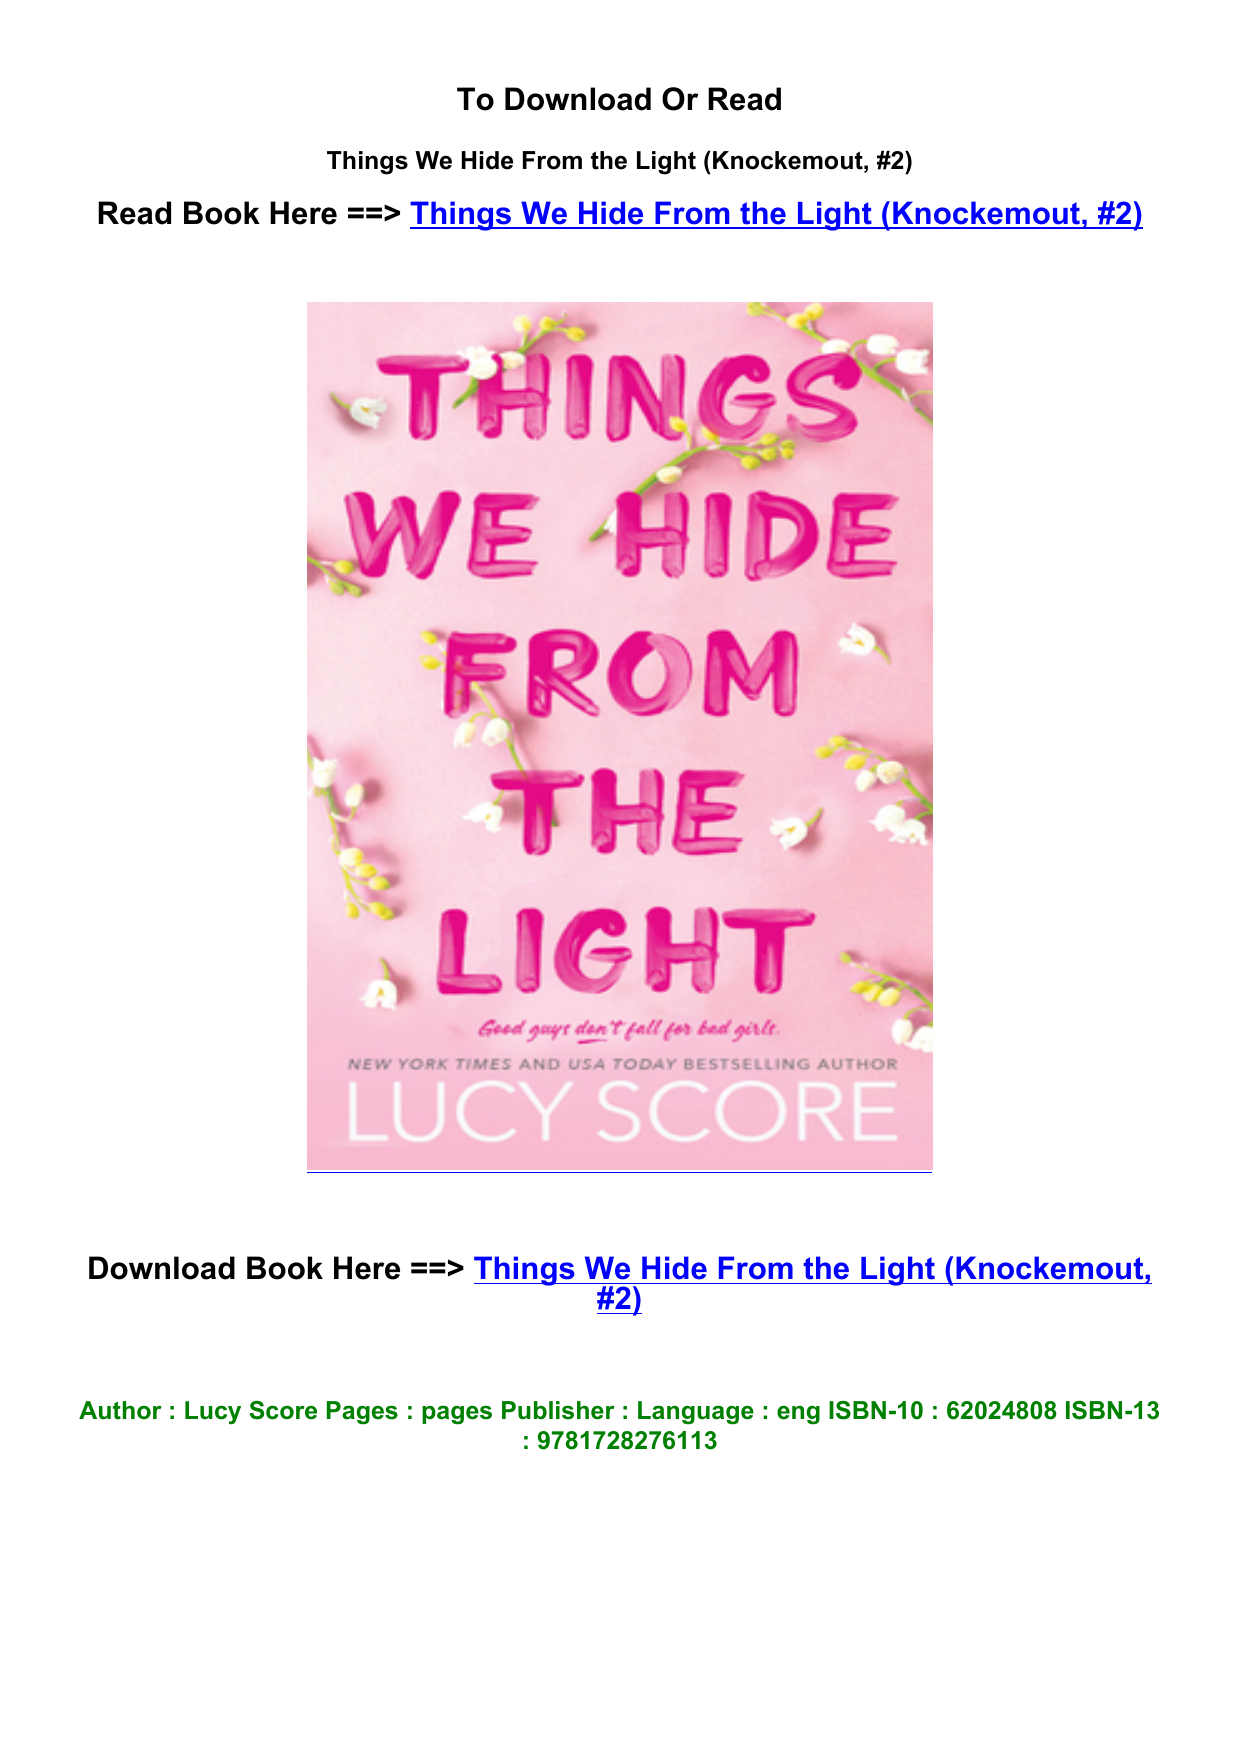 Libro [PDF EPUB] Cosas que ocultamos de la luz (Knockemout n 2) de Lucy  Score {.epub}.pdf